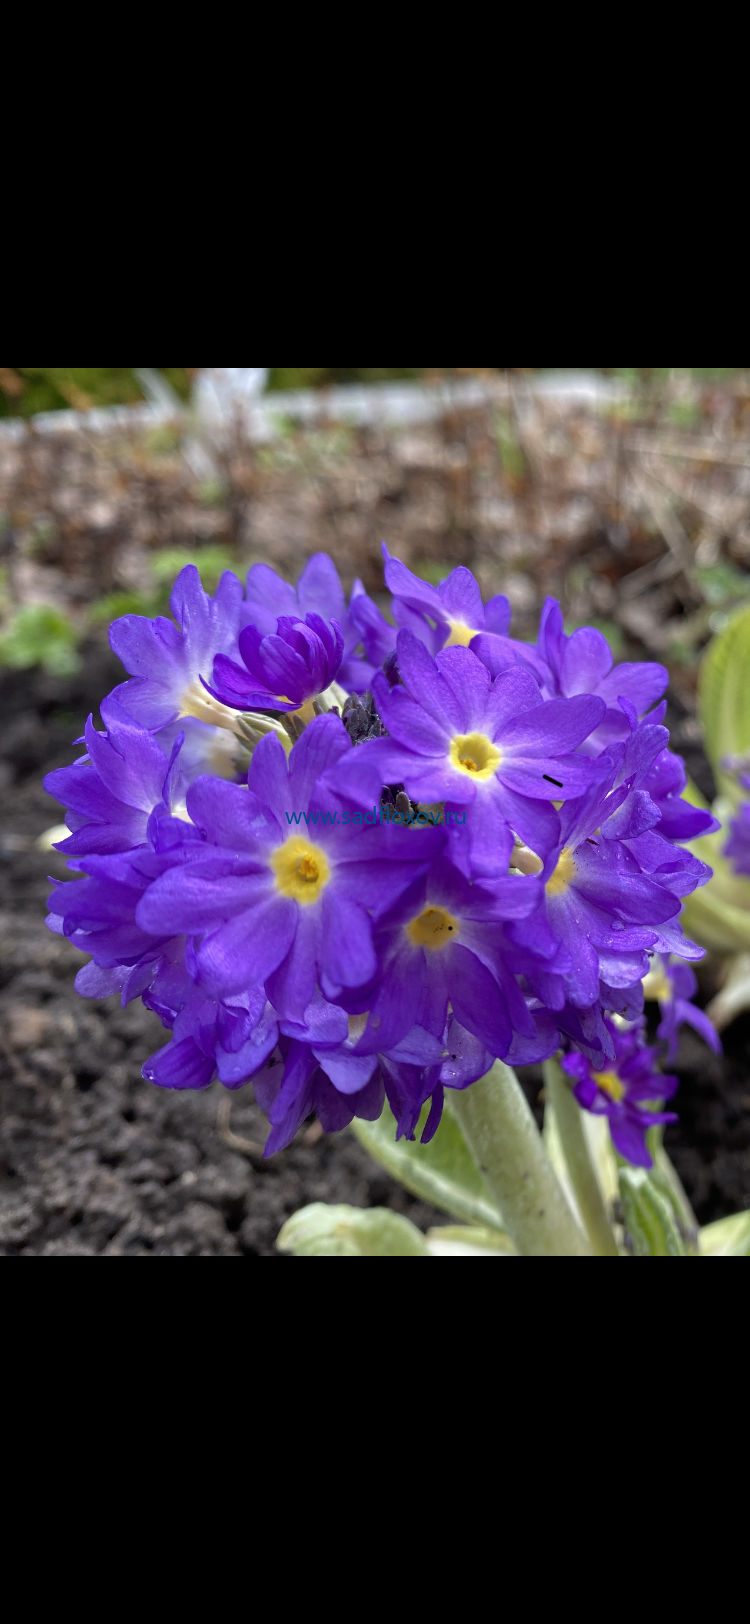 ПРИМУЛА МЕЛКОЗУБЧАТАЯ ЛИЛОВО-СИРЕНЕВАЯ Primula denticulata. Весна